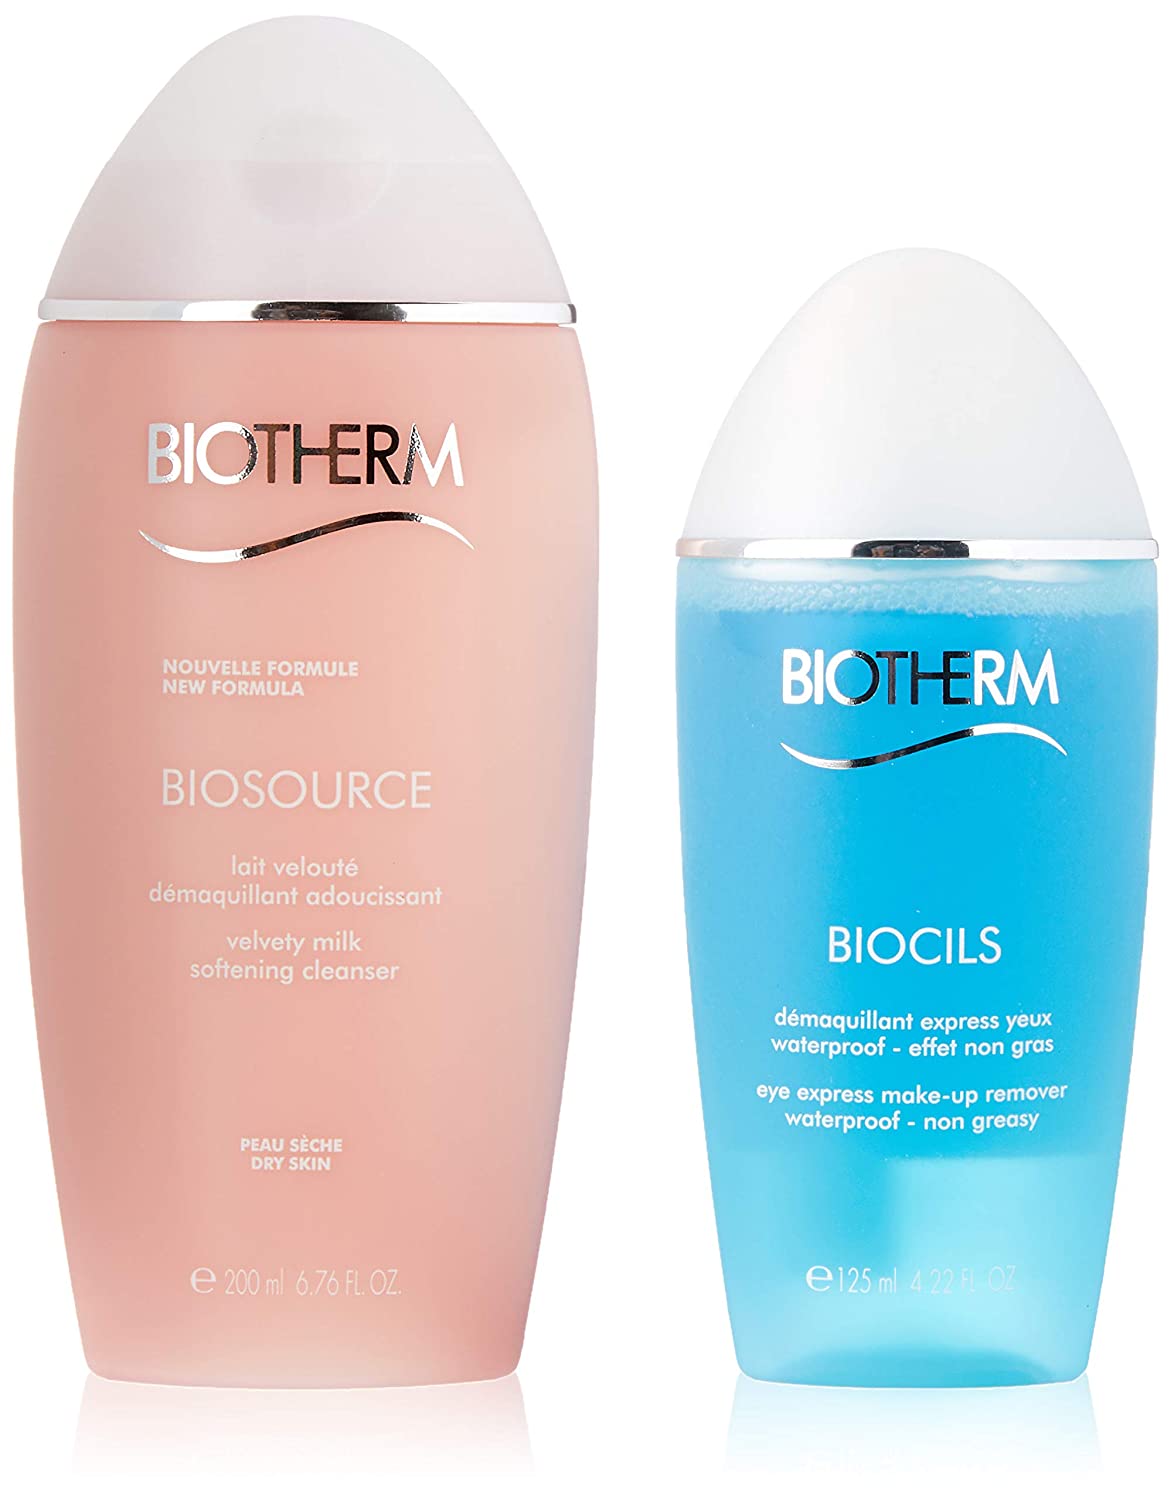 Biotherm BIOSOURCE Dry Skin 200 ml Set of 2 Items